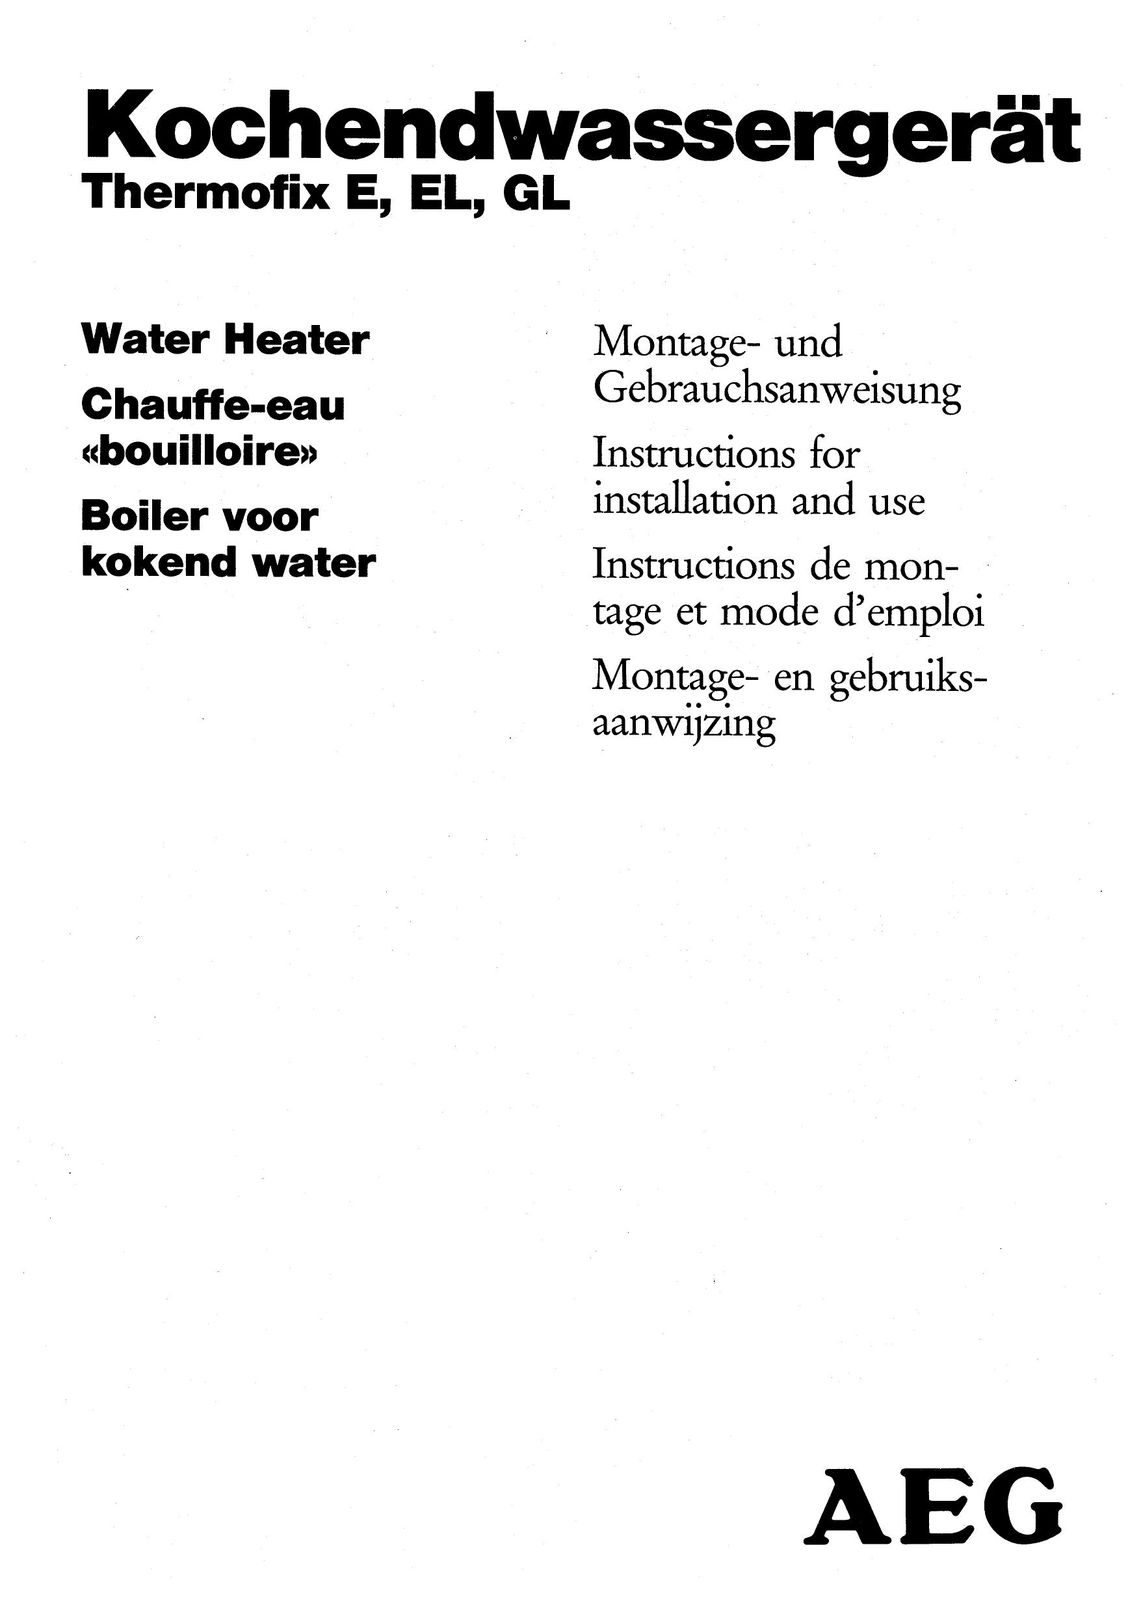 AEG EL Water Heater User Manual